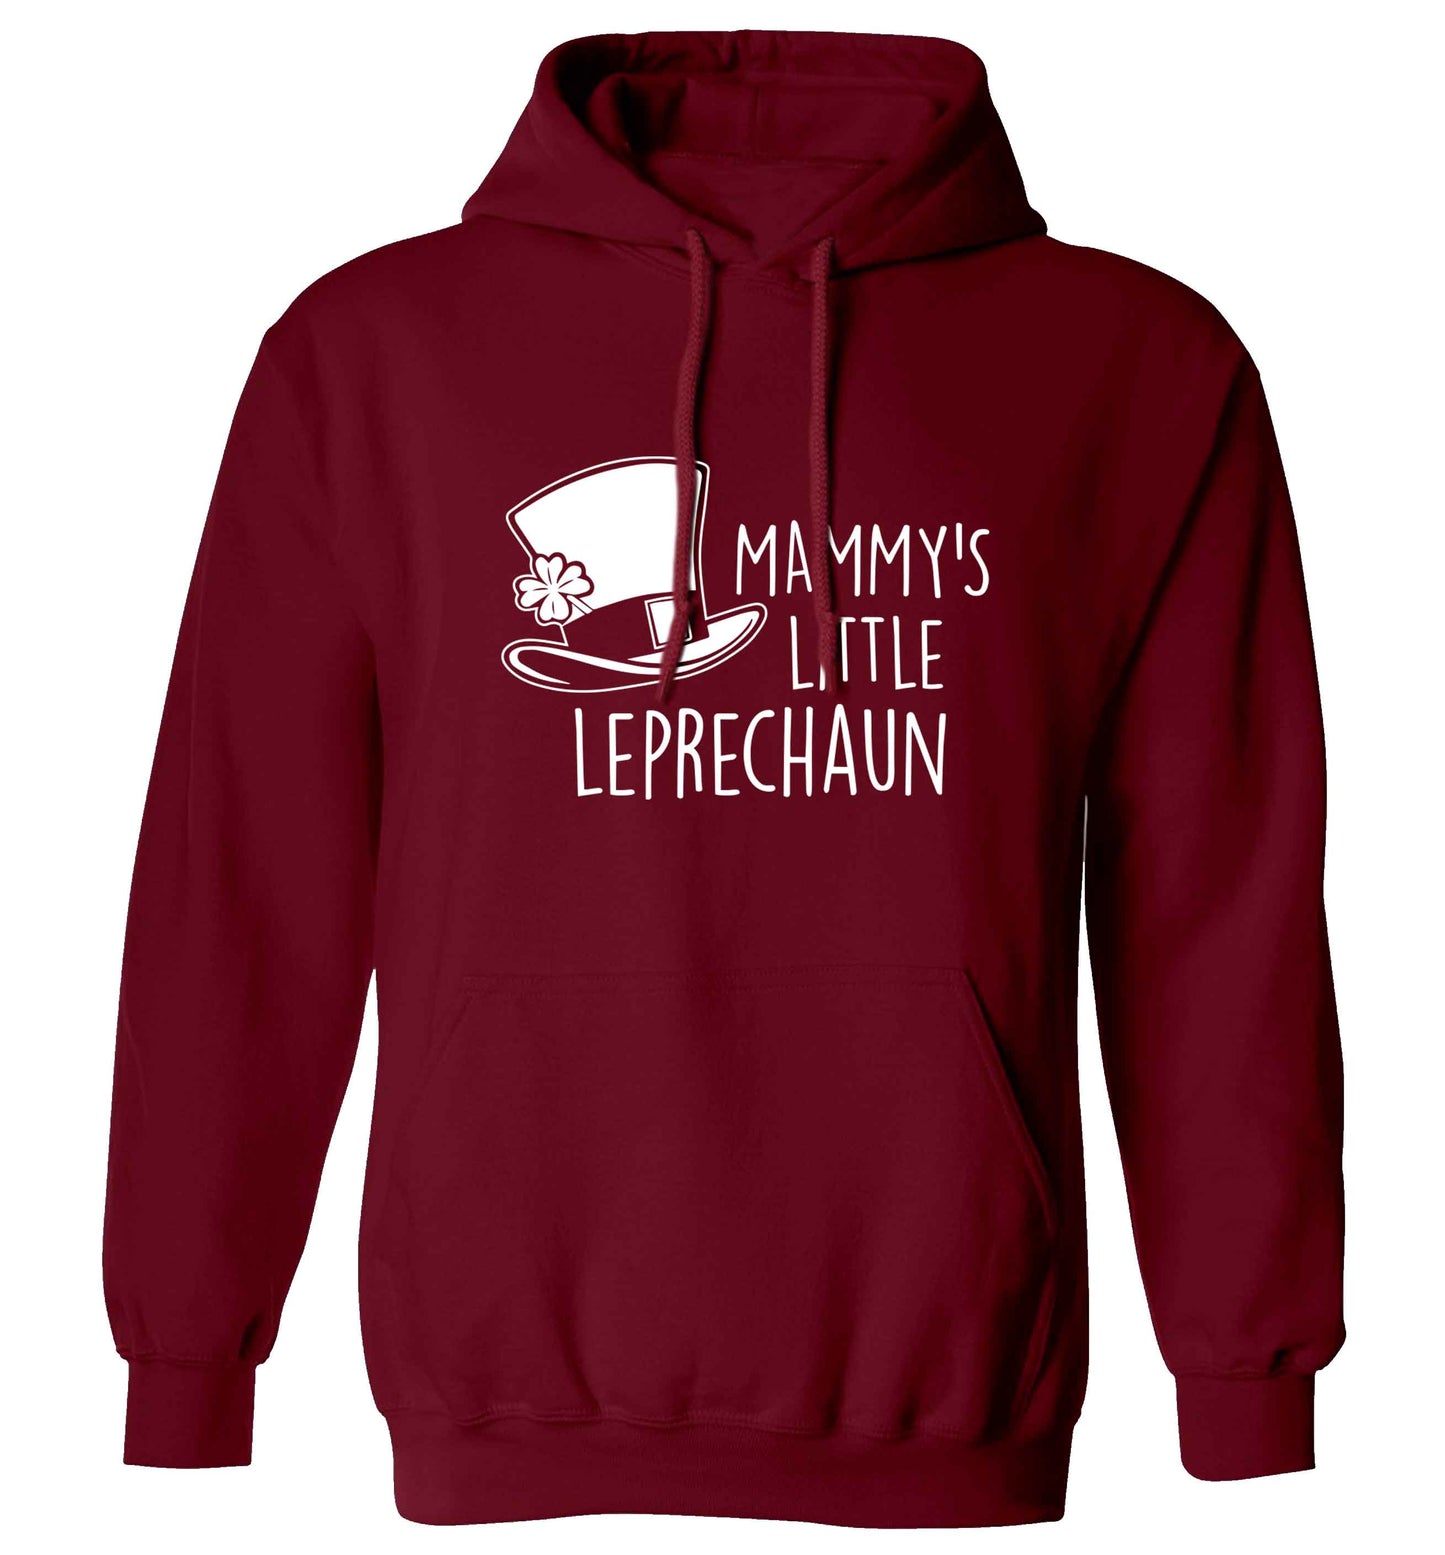 Mammy's little leprechaun adults unisex maroon hoodie 2XL